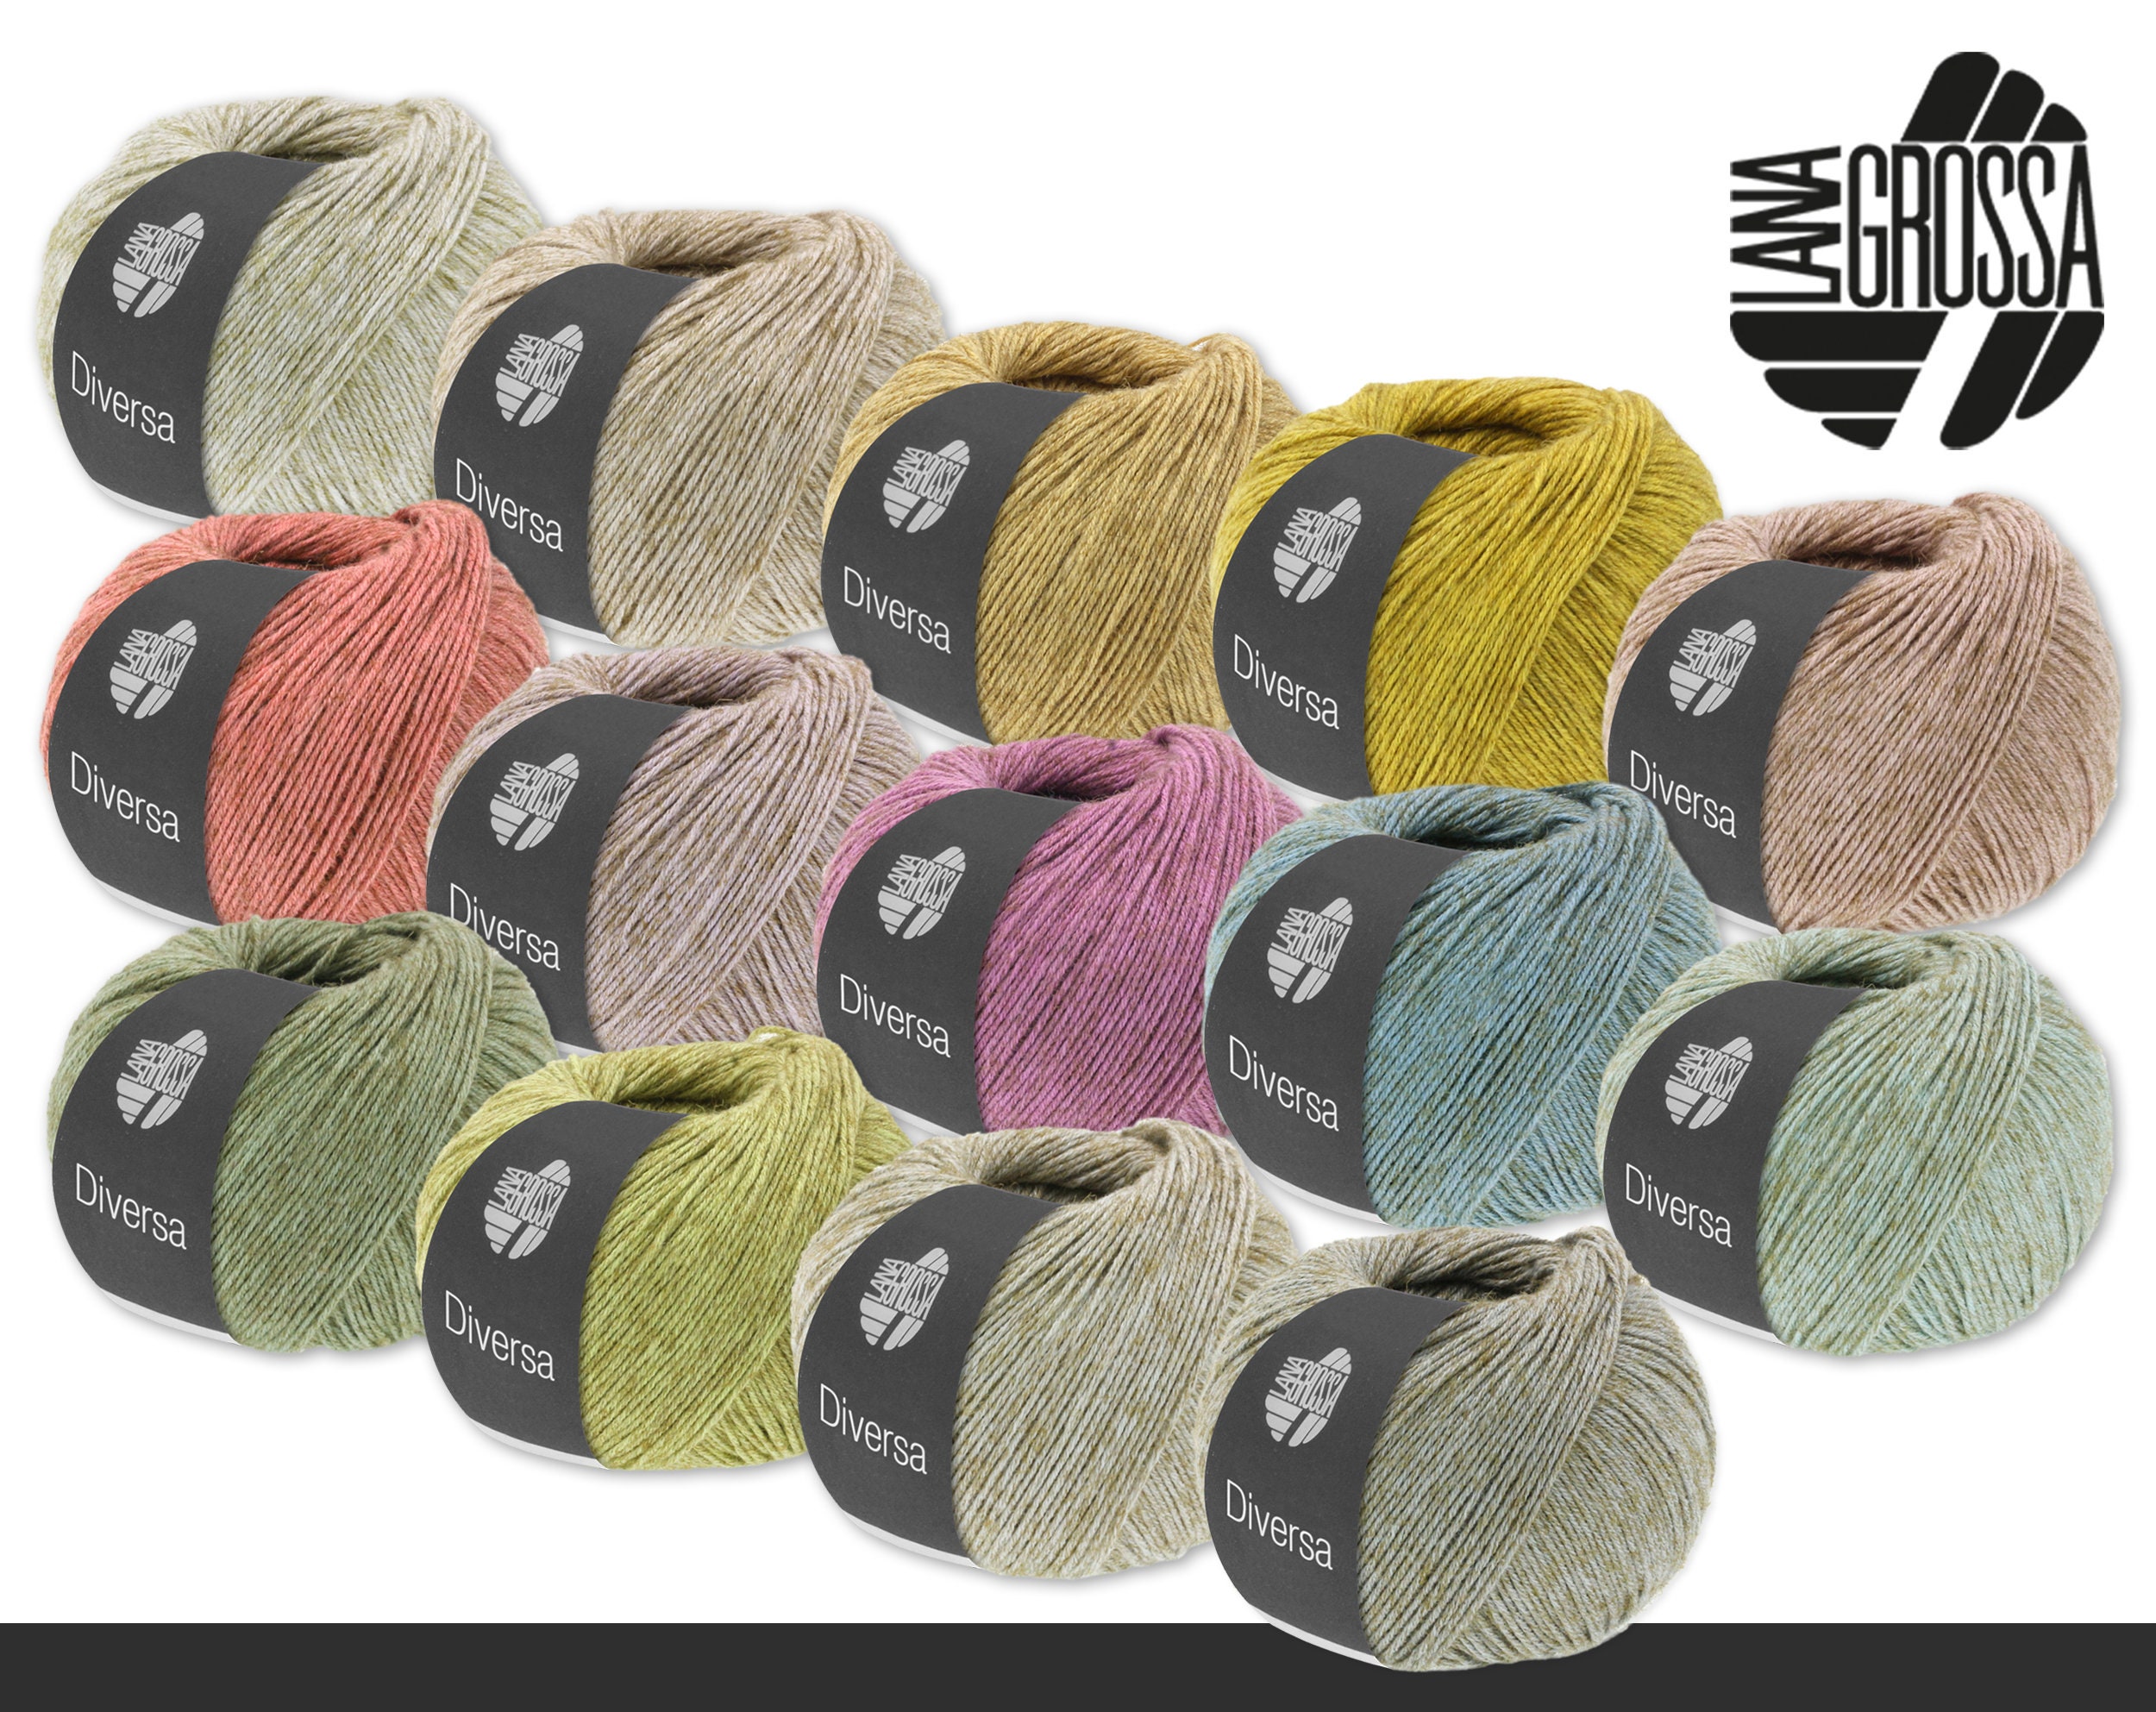 Lana Grossa Fantasia  Cotton Blend Yarn – The Knitting Lounge